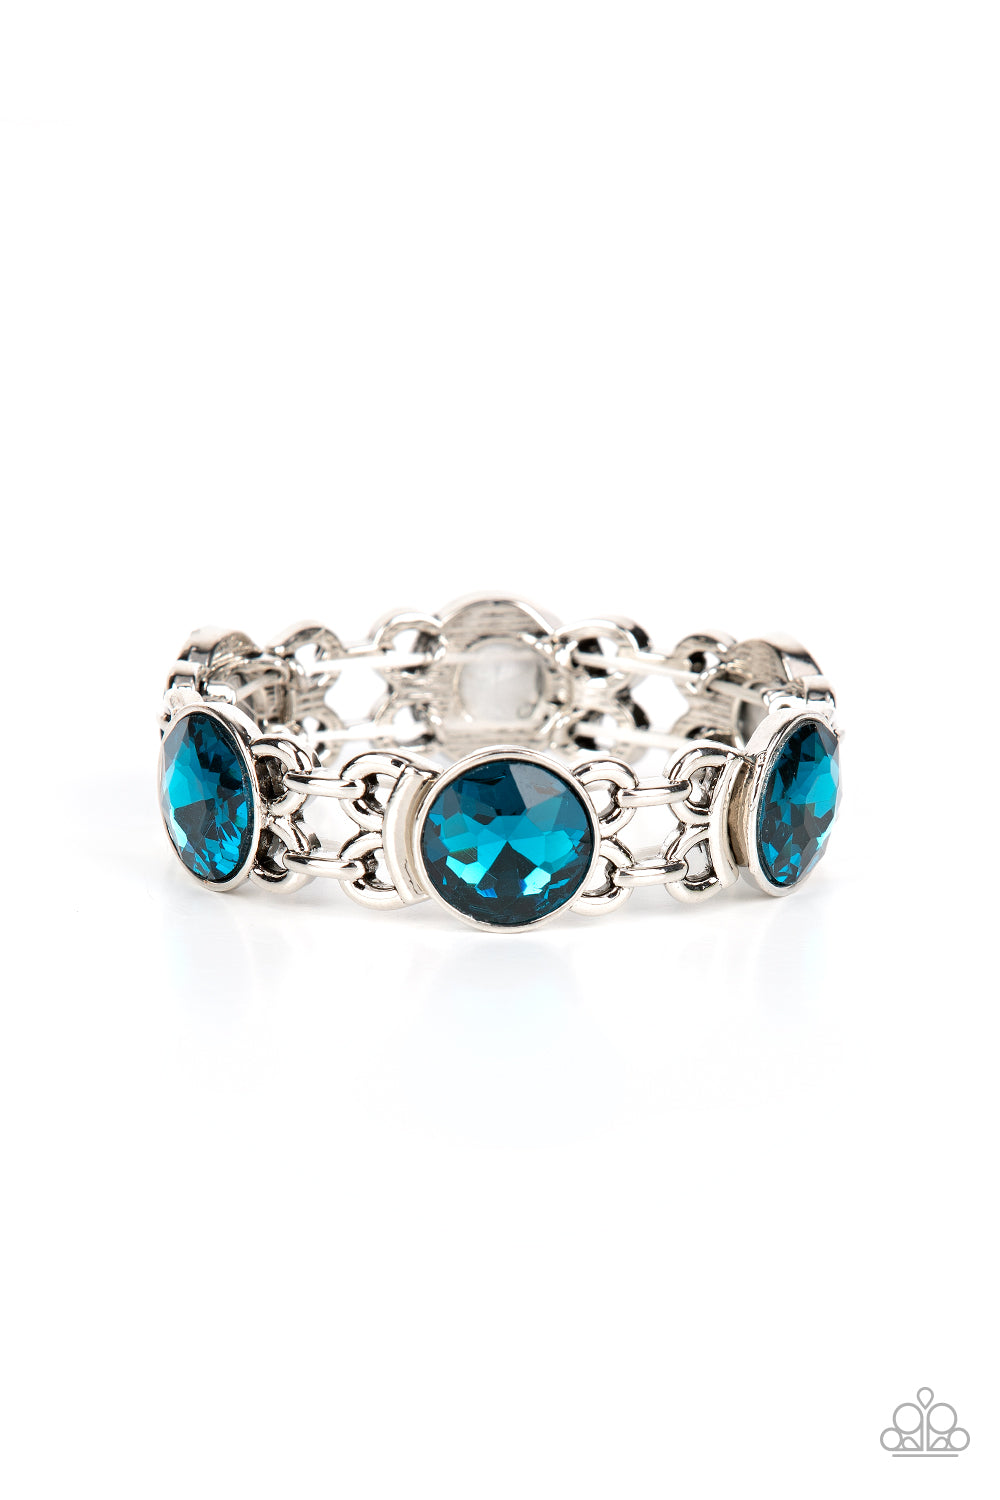 Paparazzi Devoted to Drama - Blue Bracelet - A Finishing Touch Jewelry